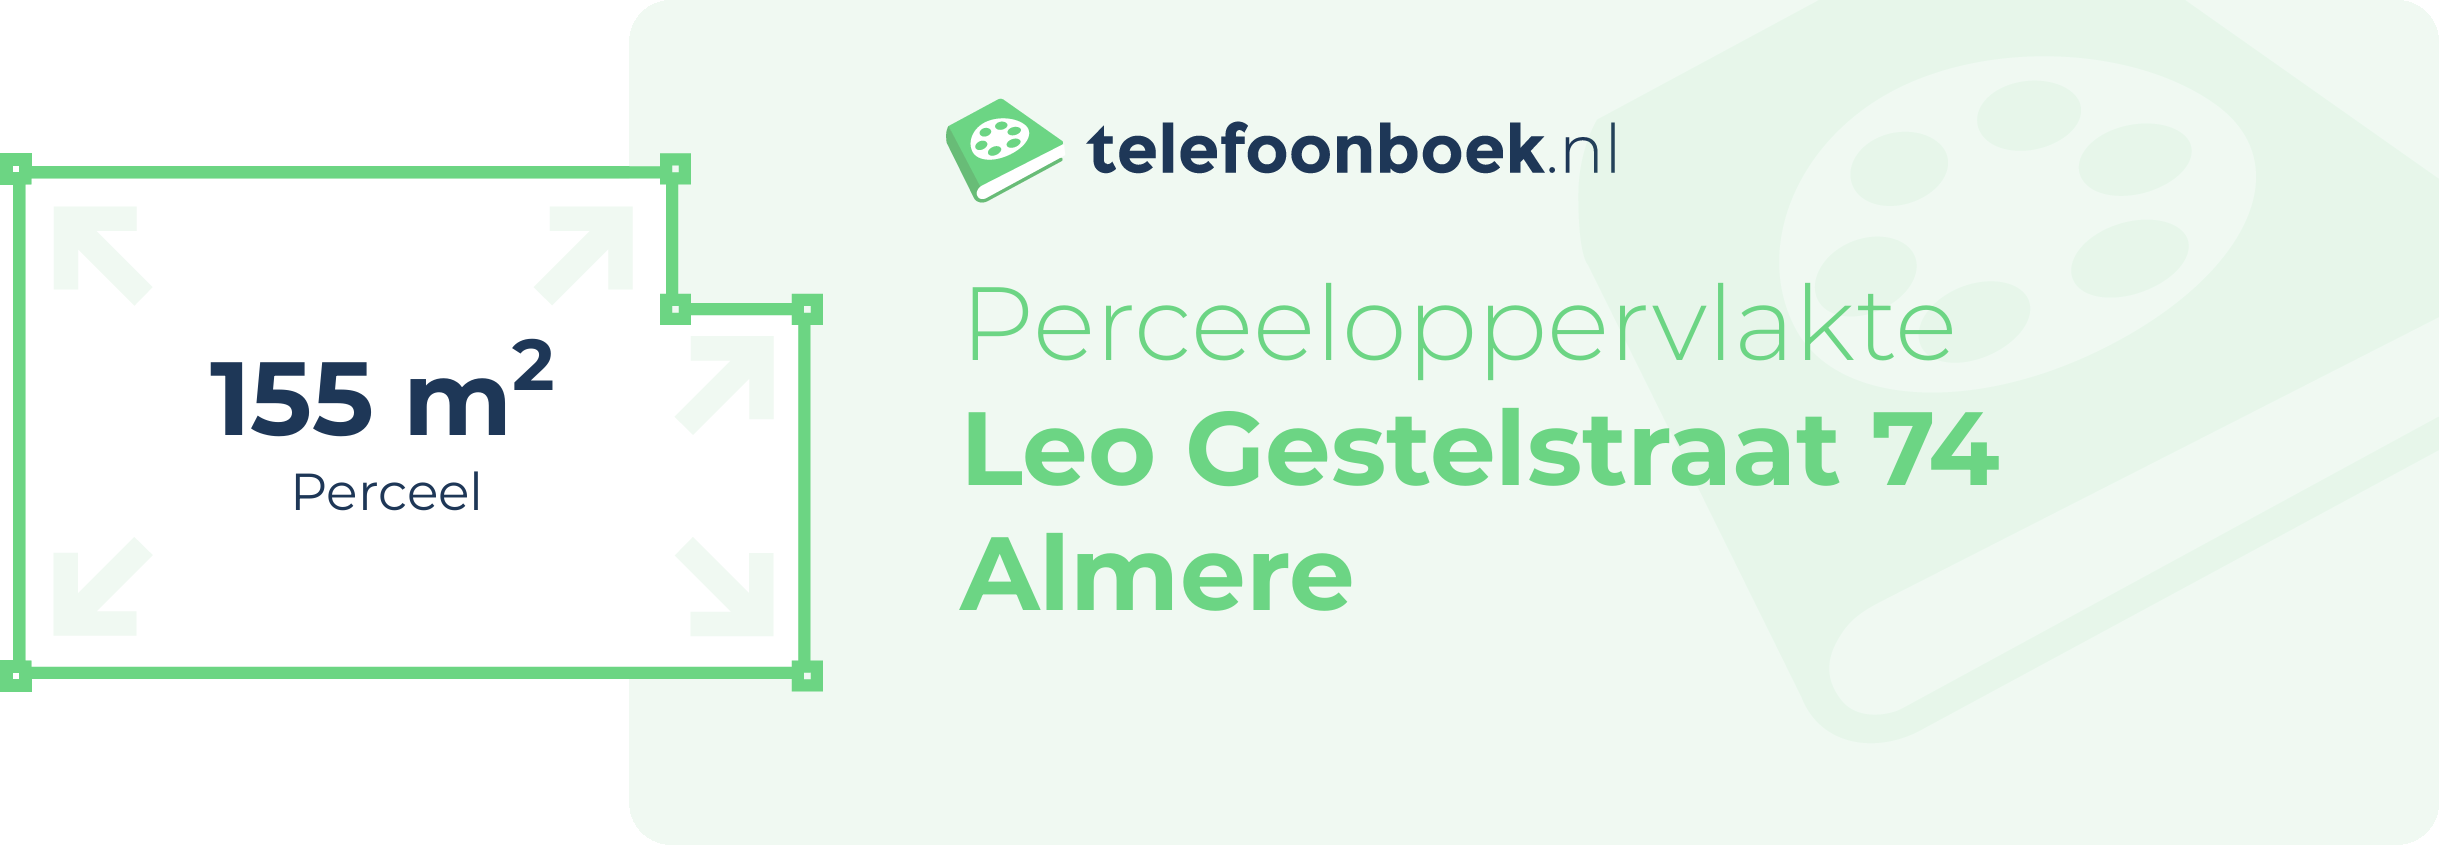 Perceeloppervlakte Leo Gestelstraat 74 Almere